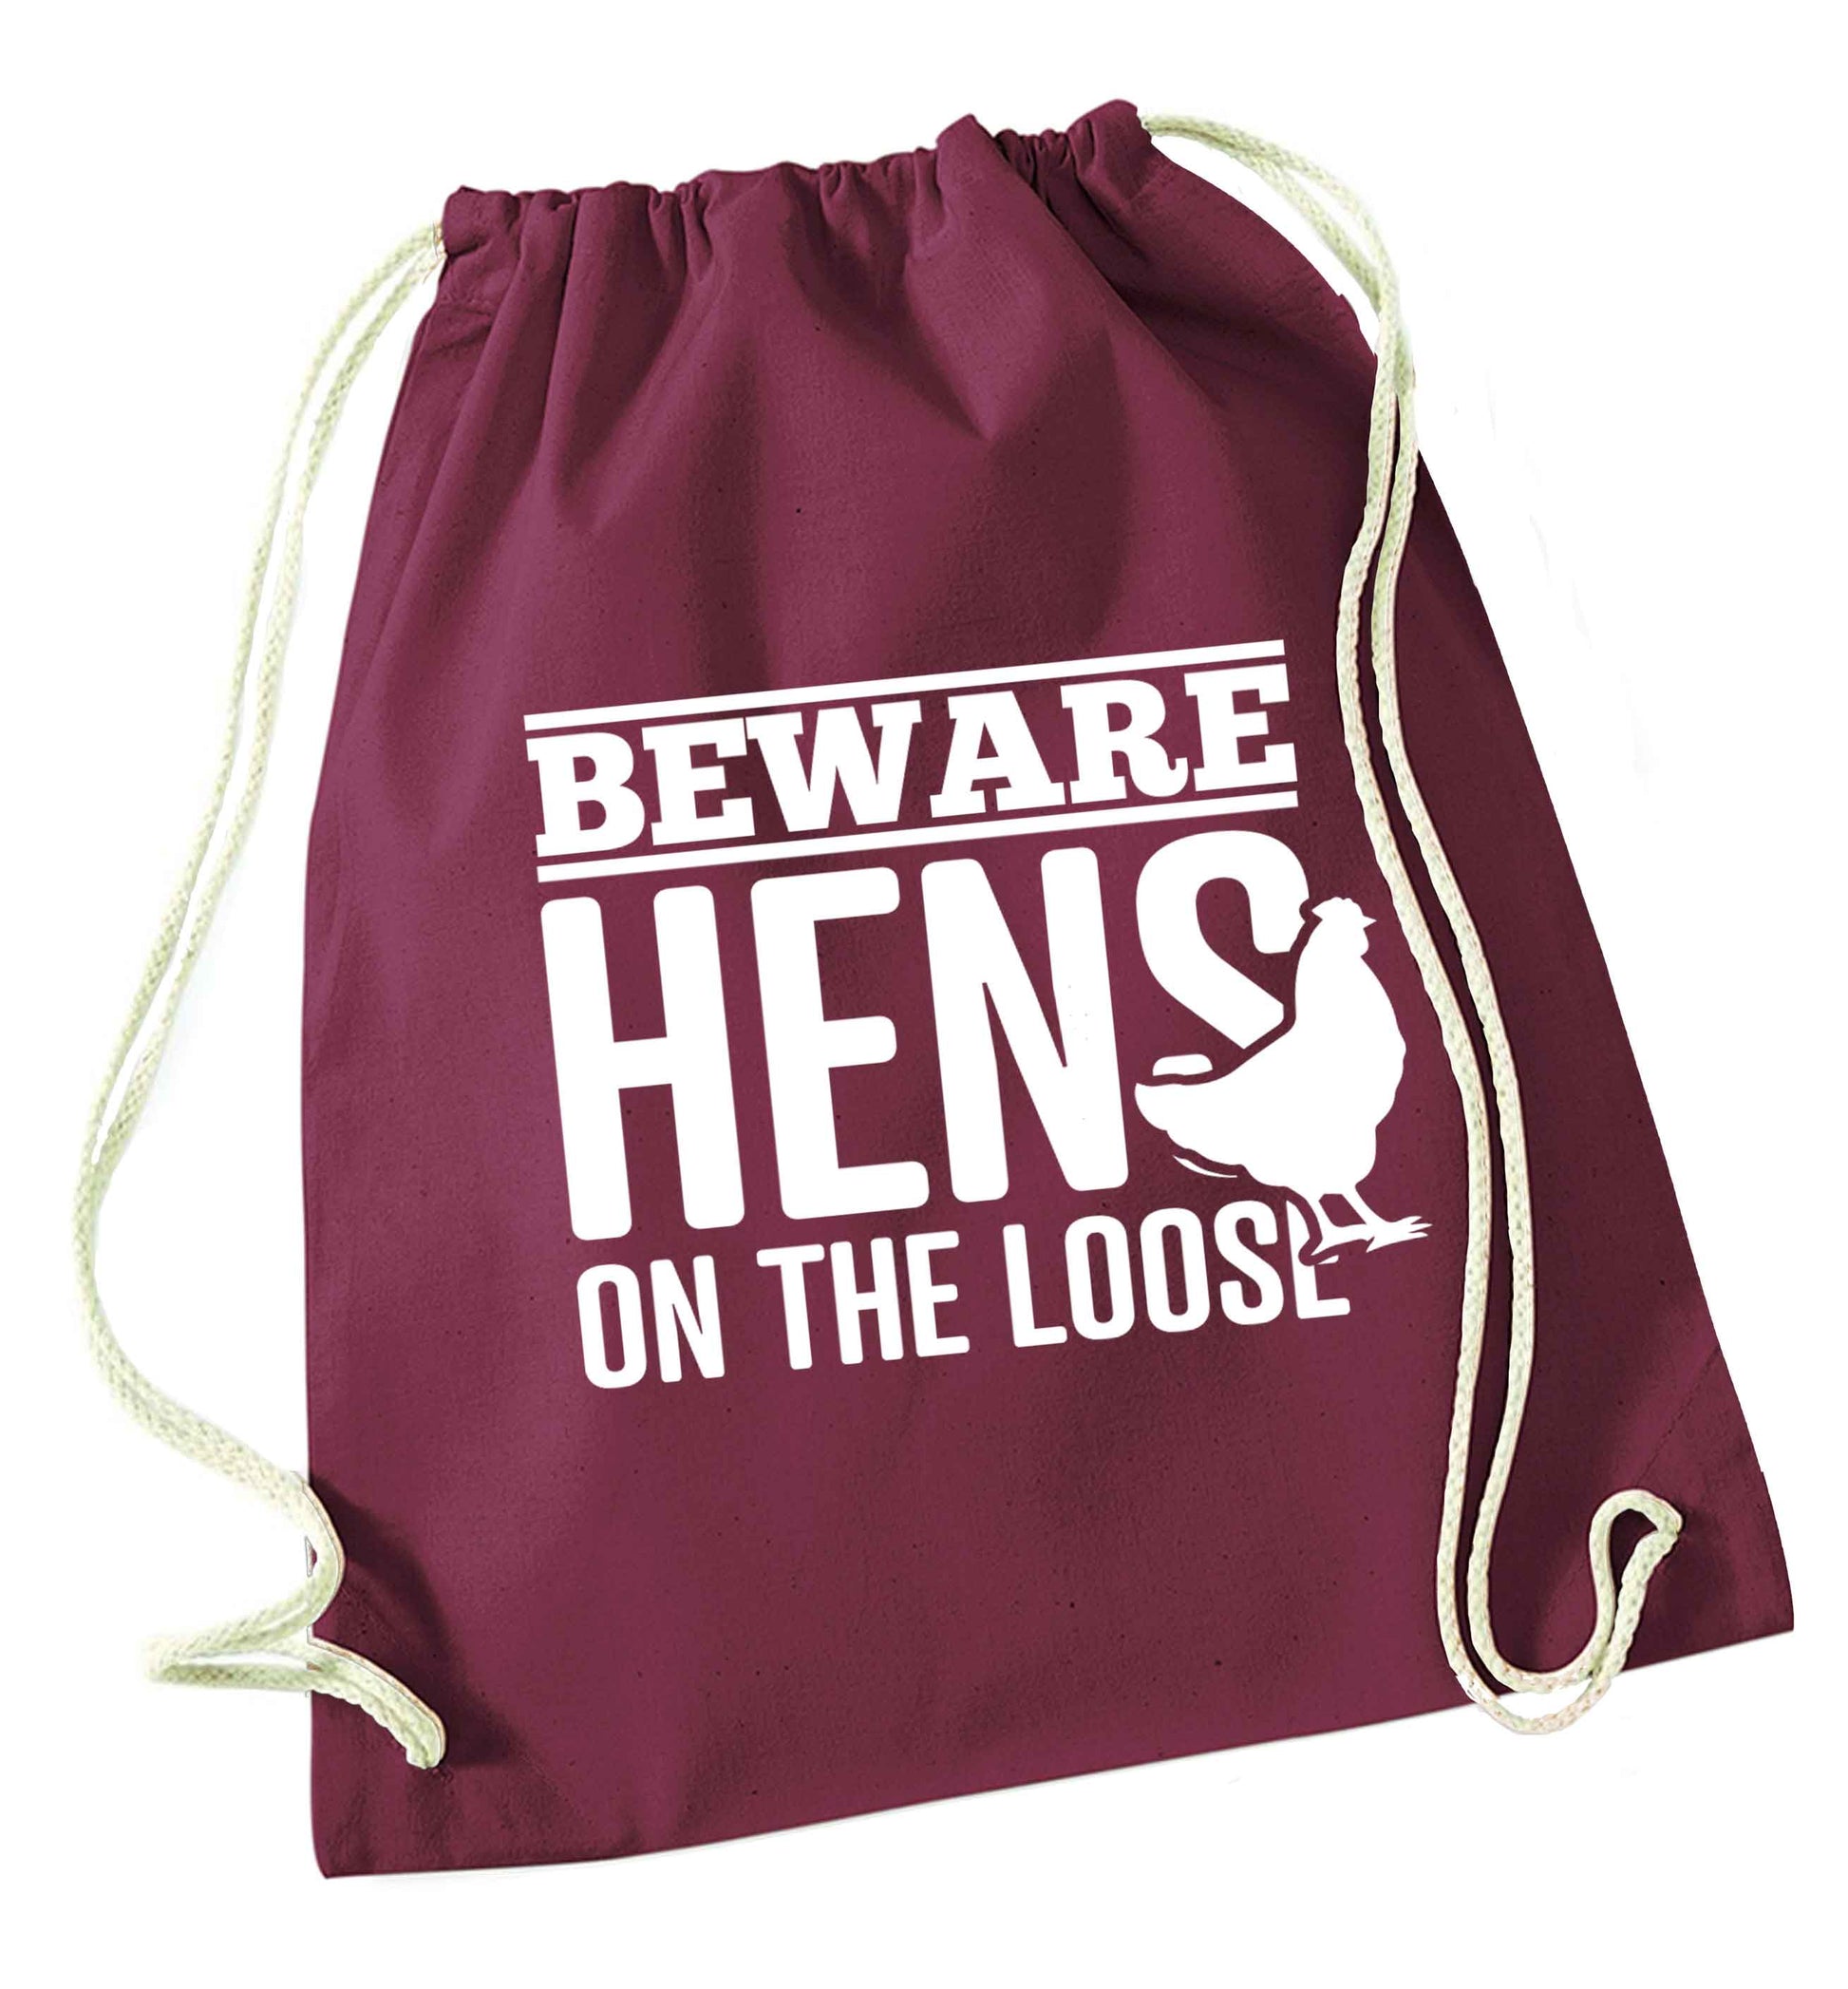 Beware hens on the loose maroon drawstring bag